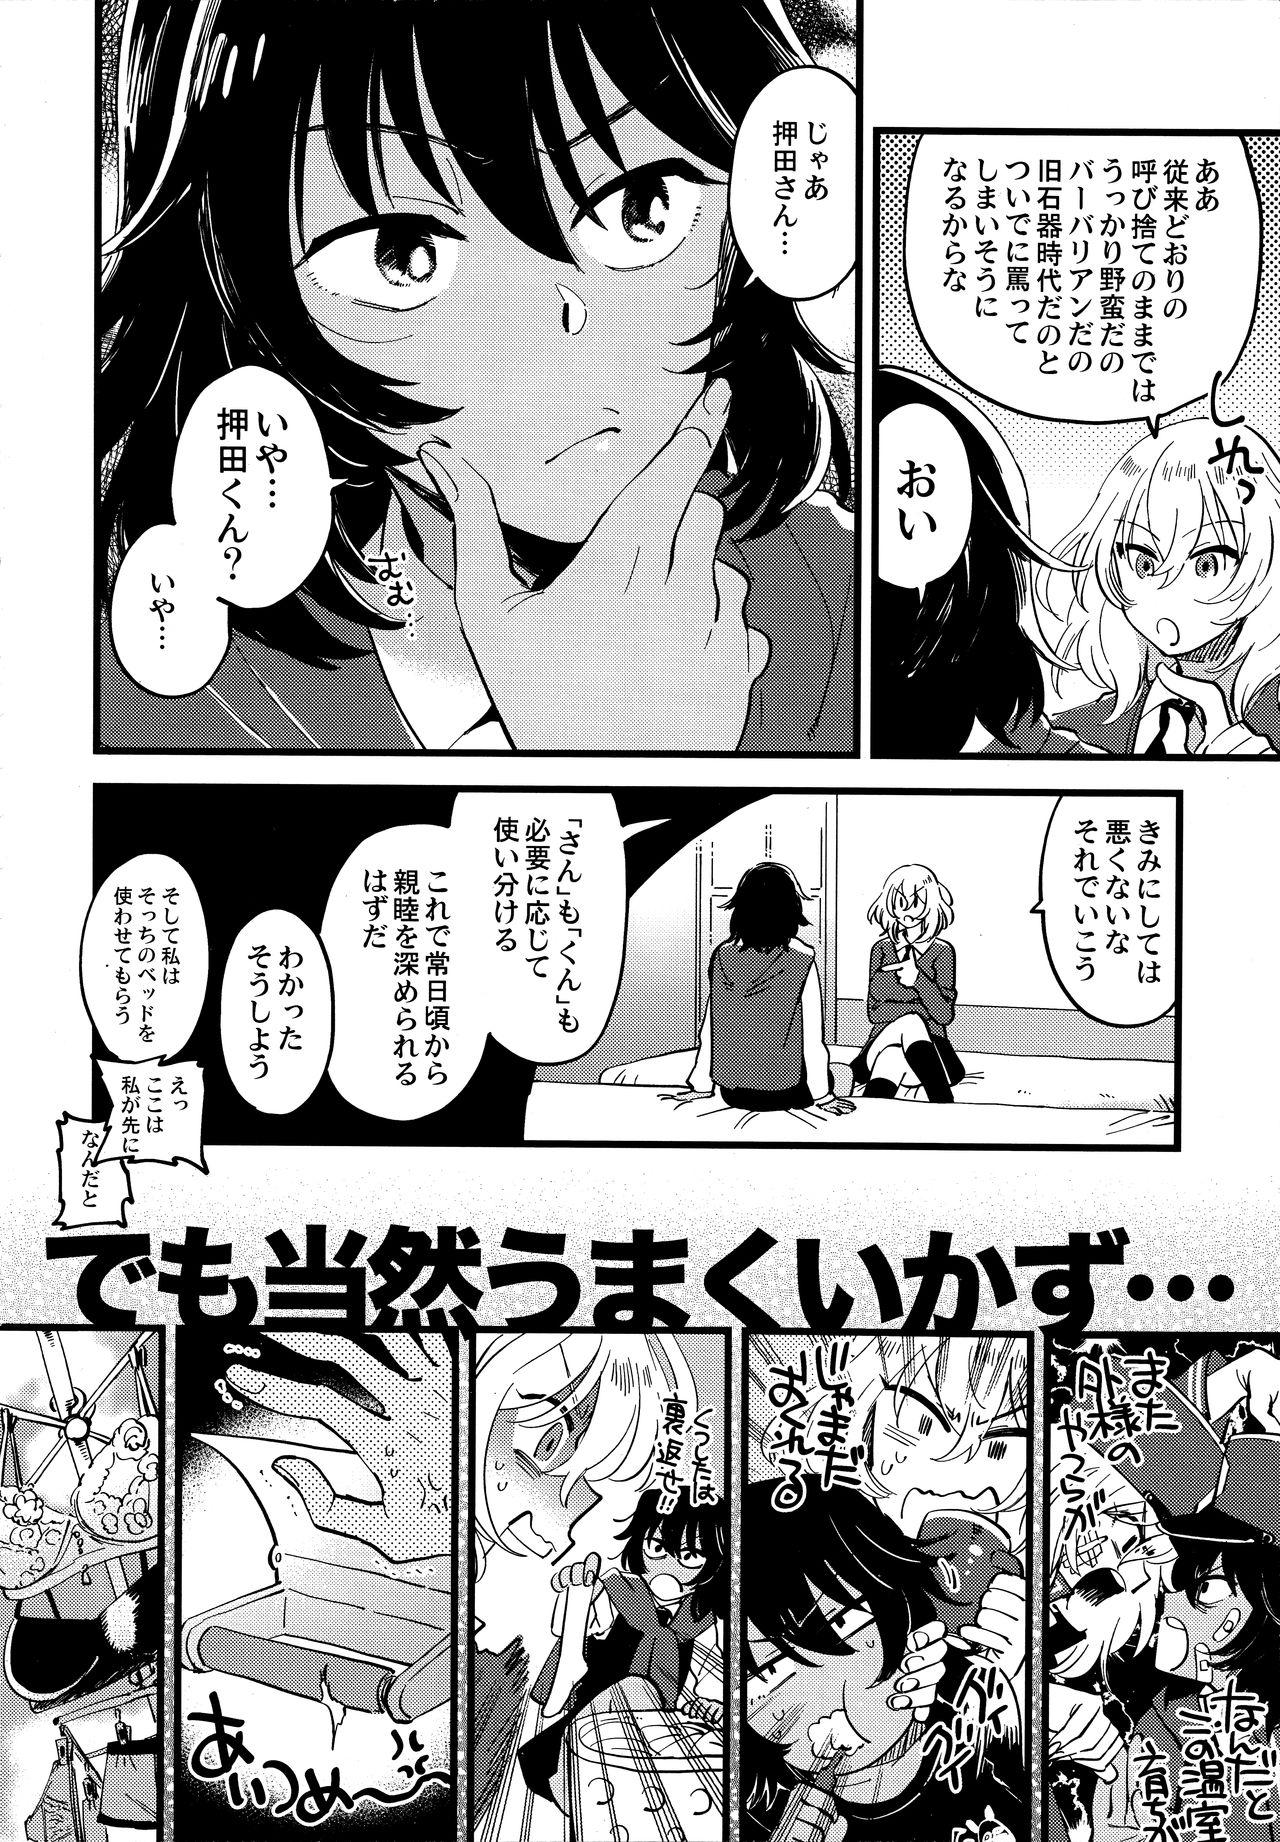 Suck AnOshi, Nakayoku! - Girls und panzer Fist - Page 5